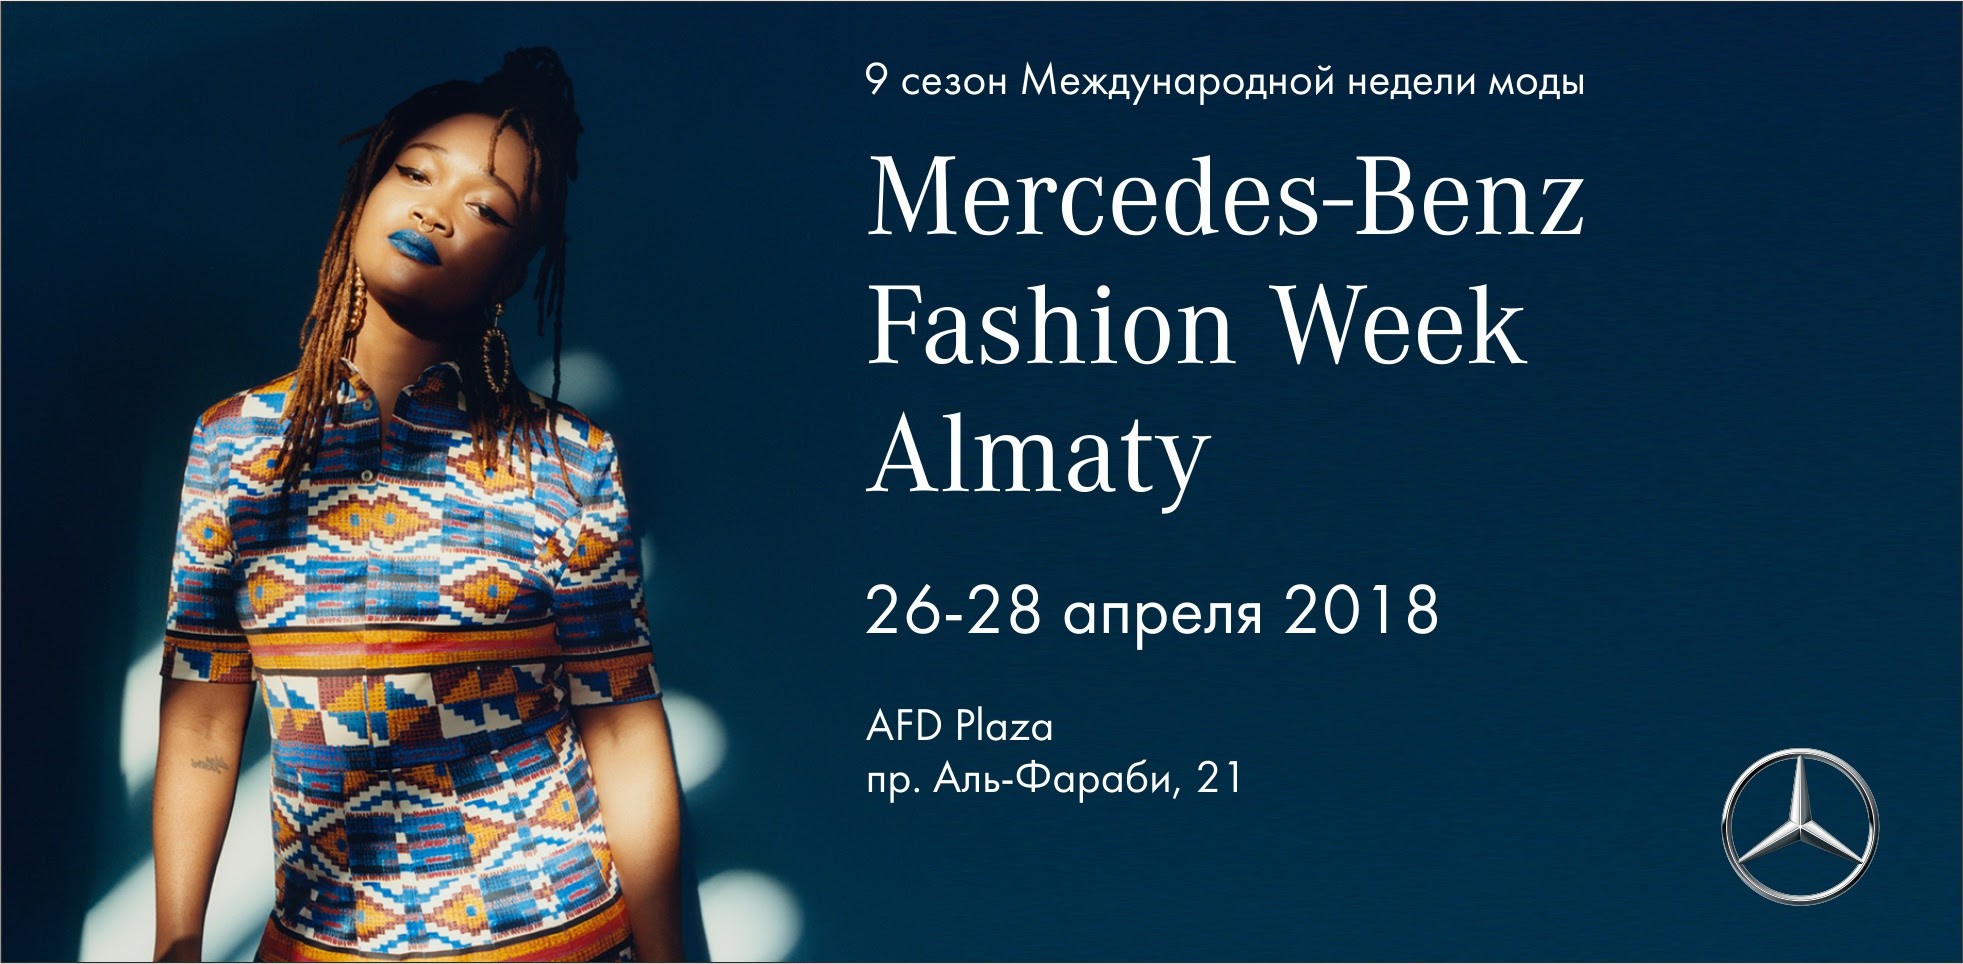 9-ый сезон Международной недели моды Mercedes-Benz Fashion Week Almaty (MBFWA)